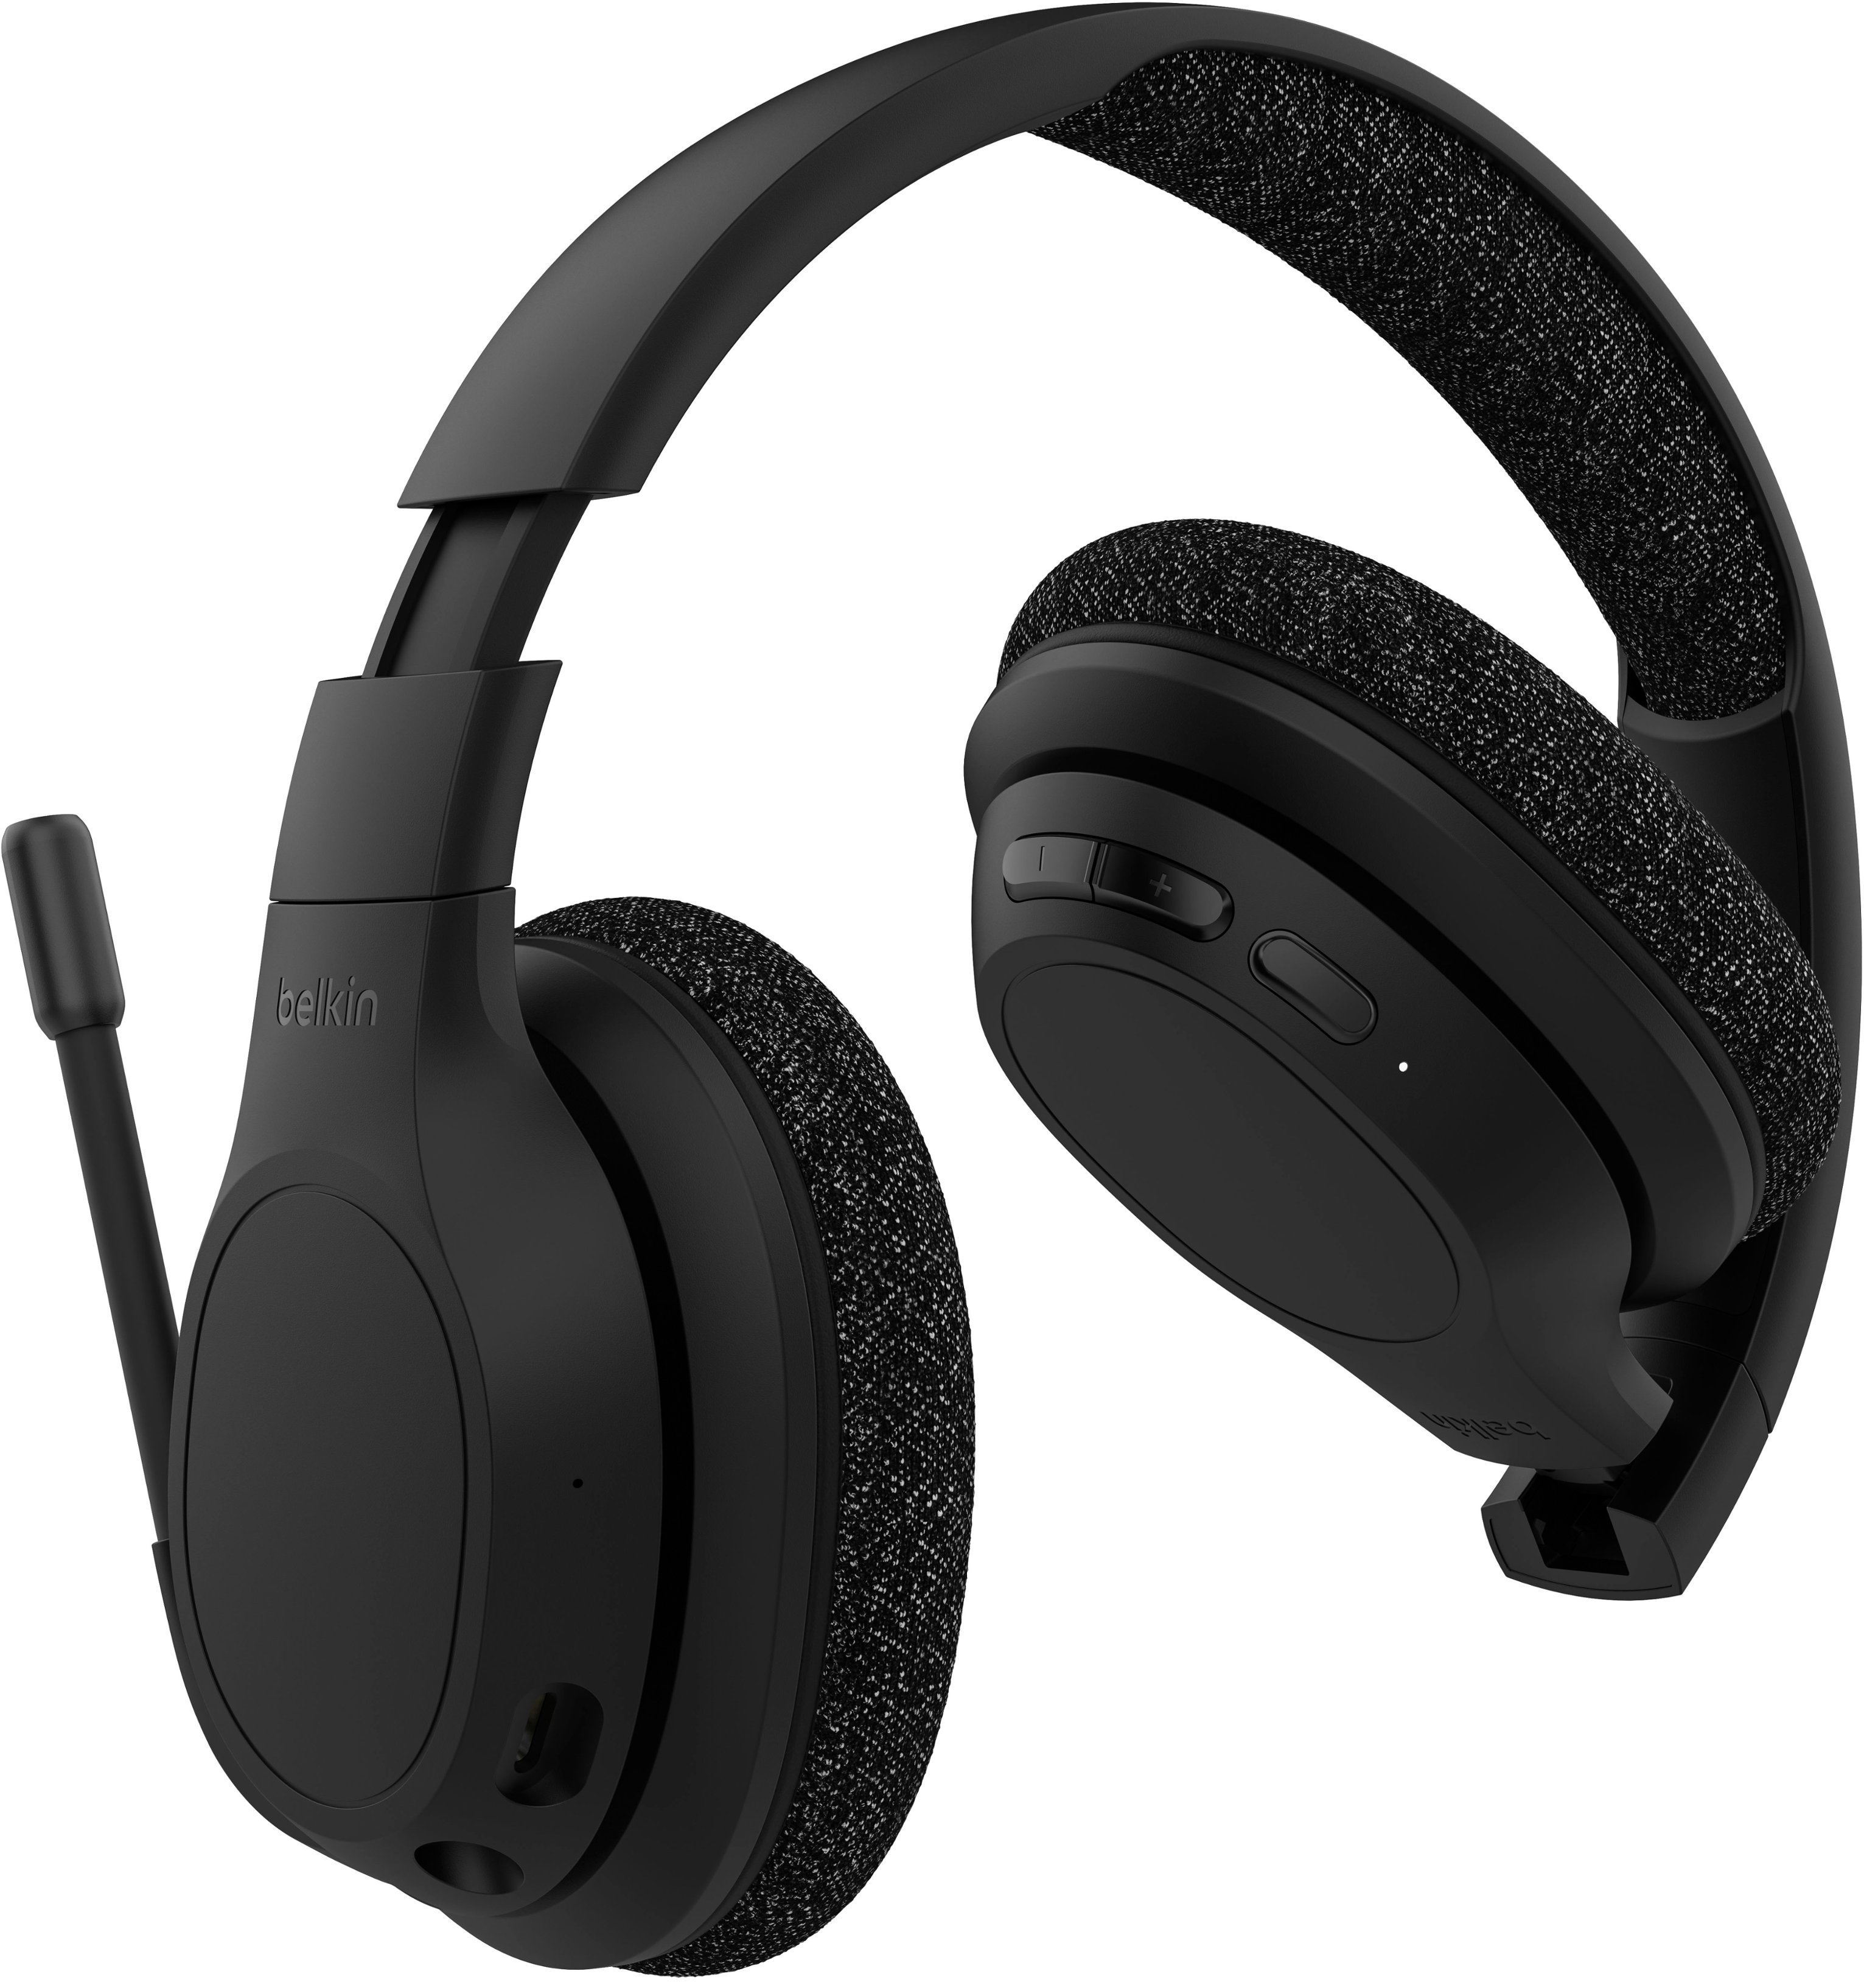 Angle View: Belkin - SoundForm™ Adapt Wireless Over-Ear Headset - Black